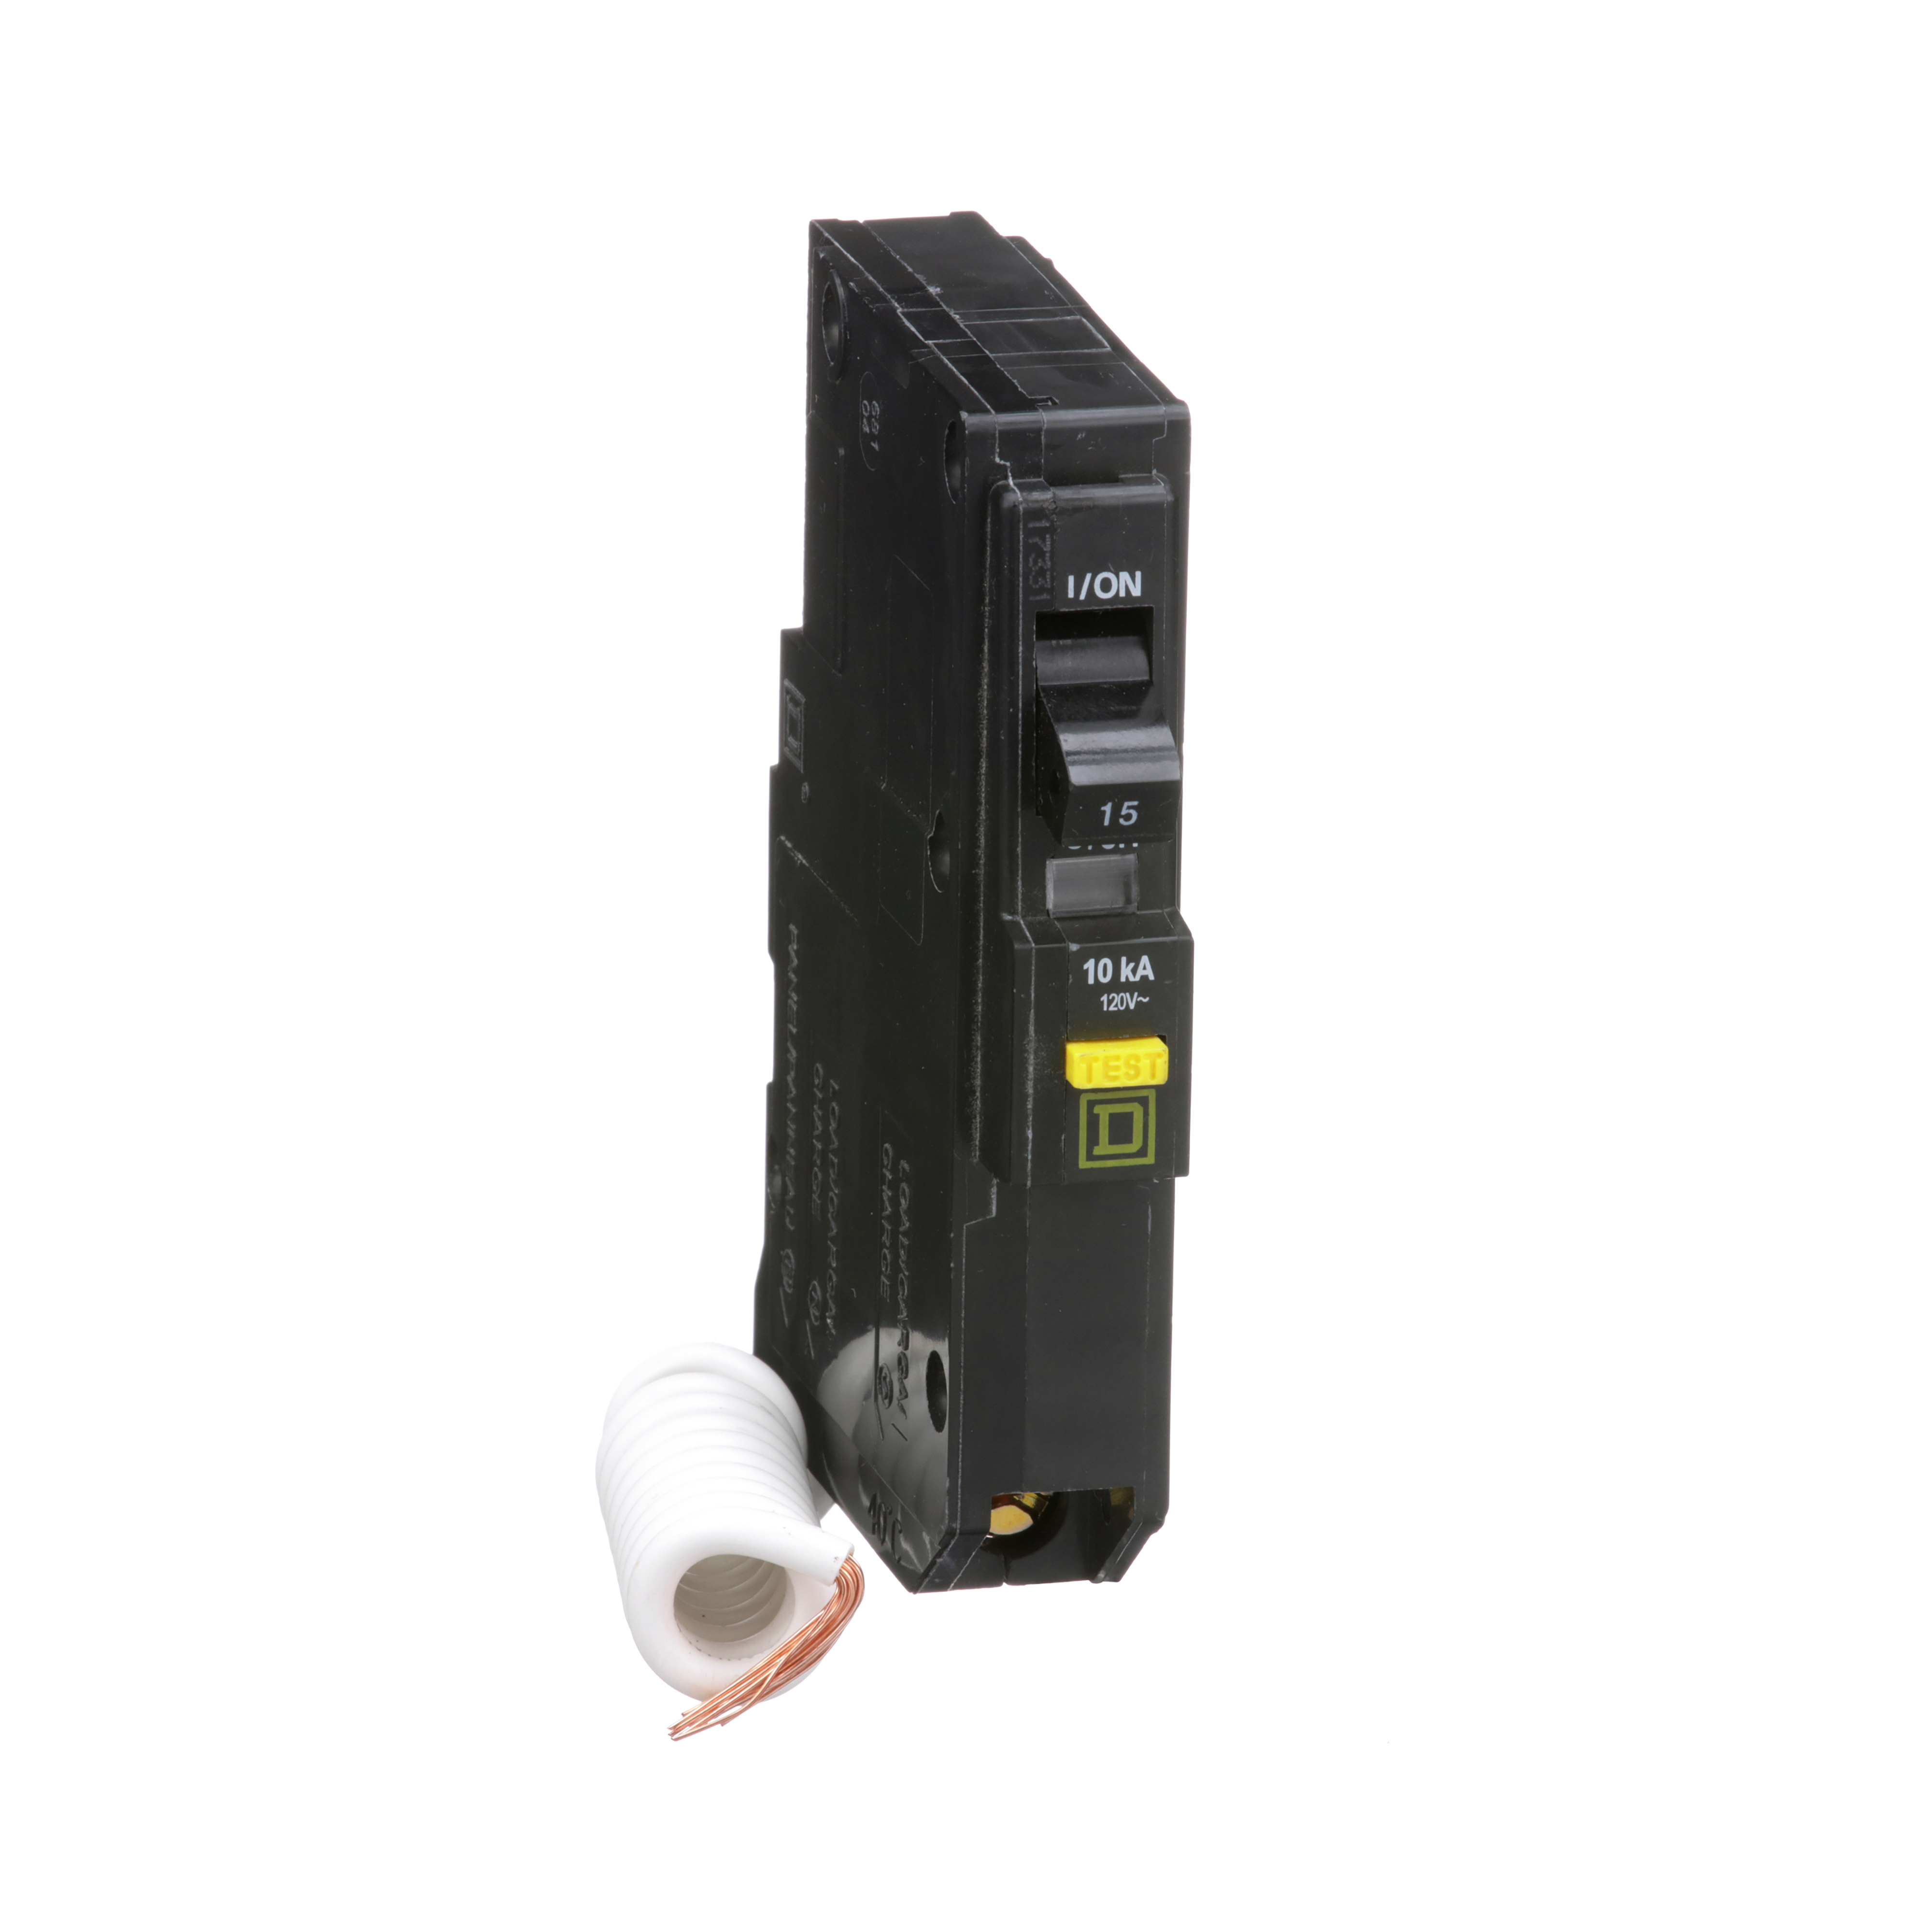 Mini circuit breaker, QO, 15A, 1 pole, 120VAC, 10kA, 6mA grd fault A, pigtail, plug in mount